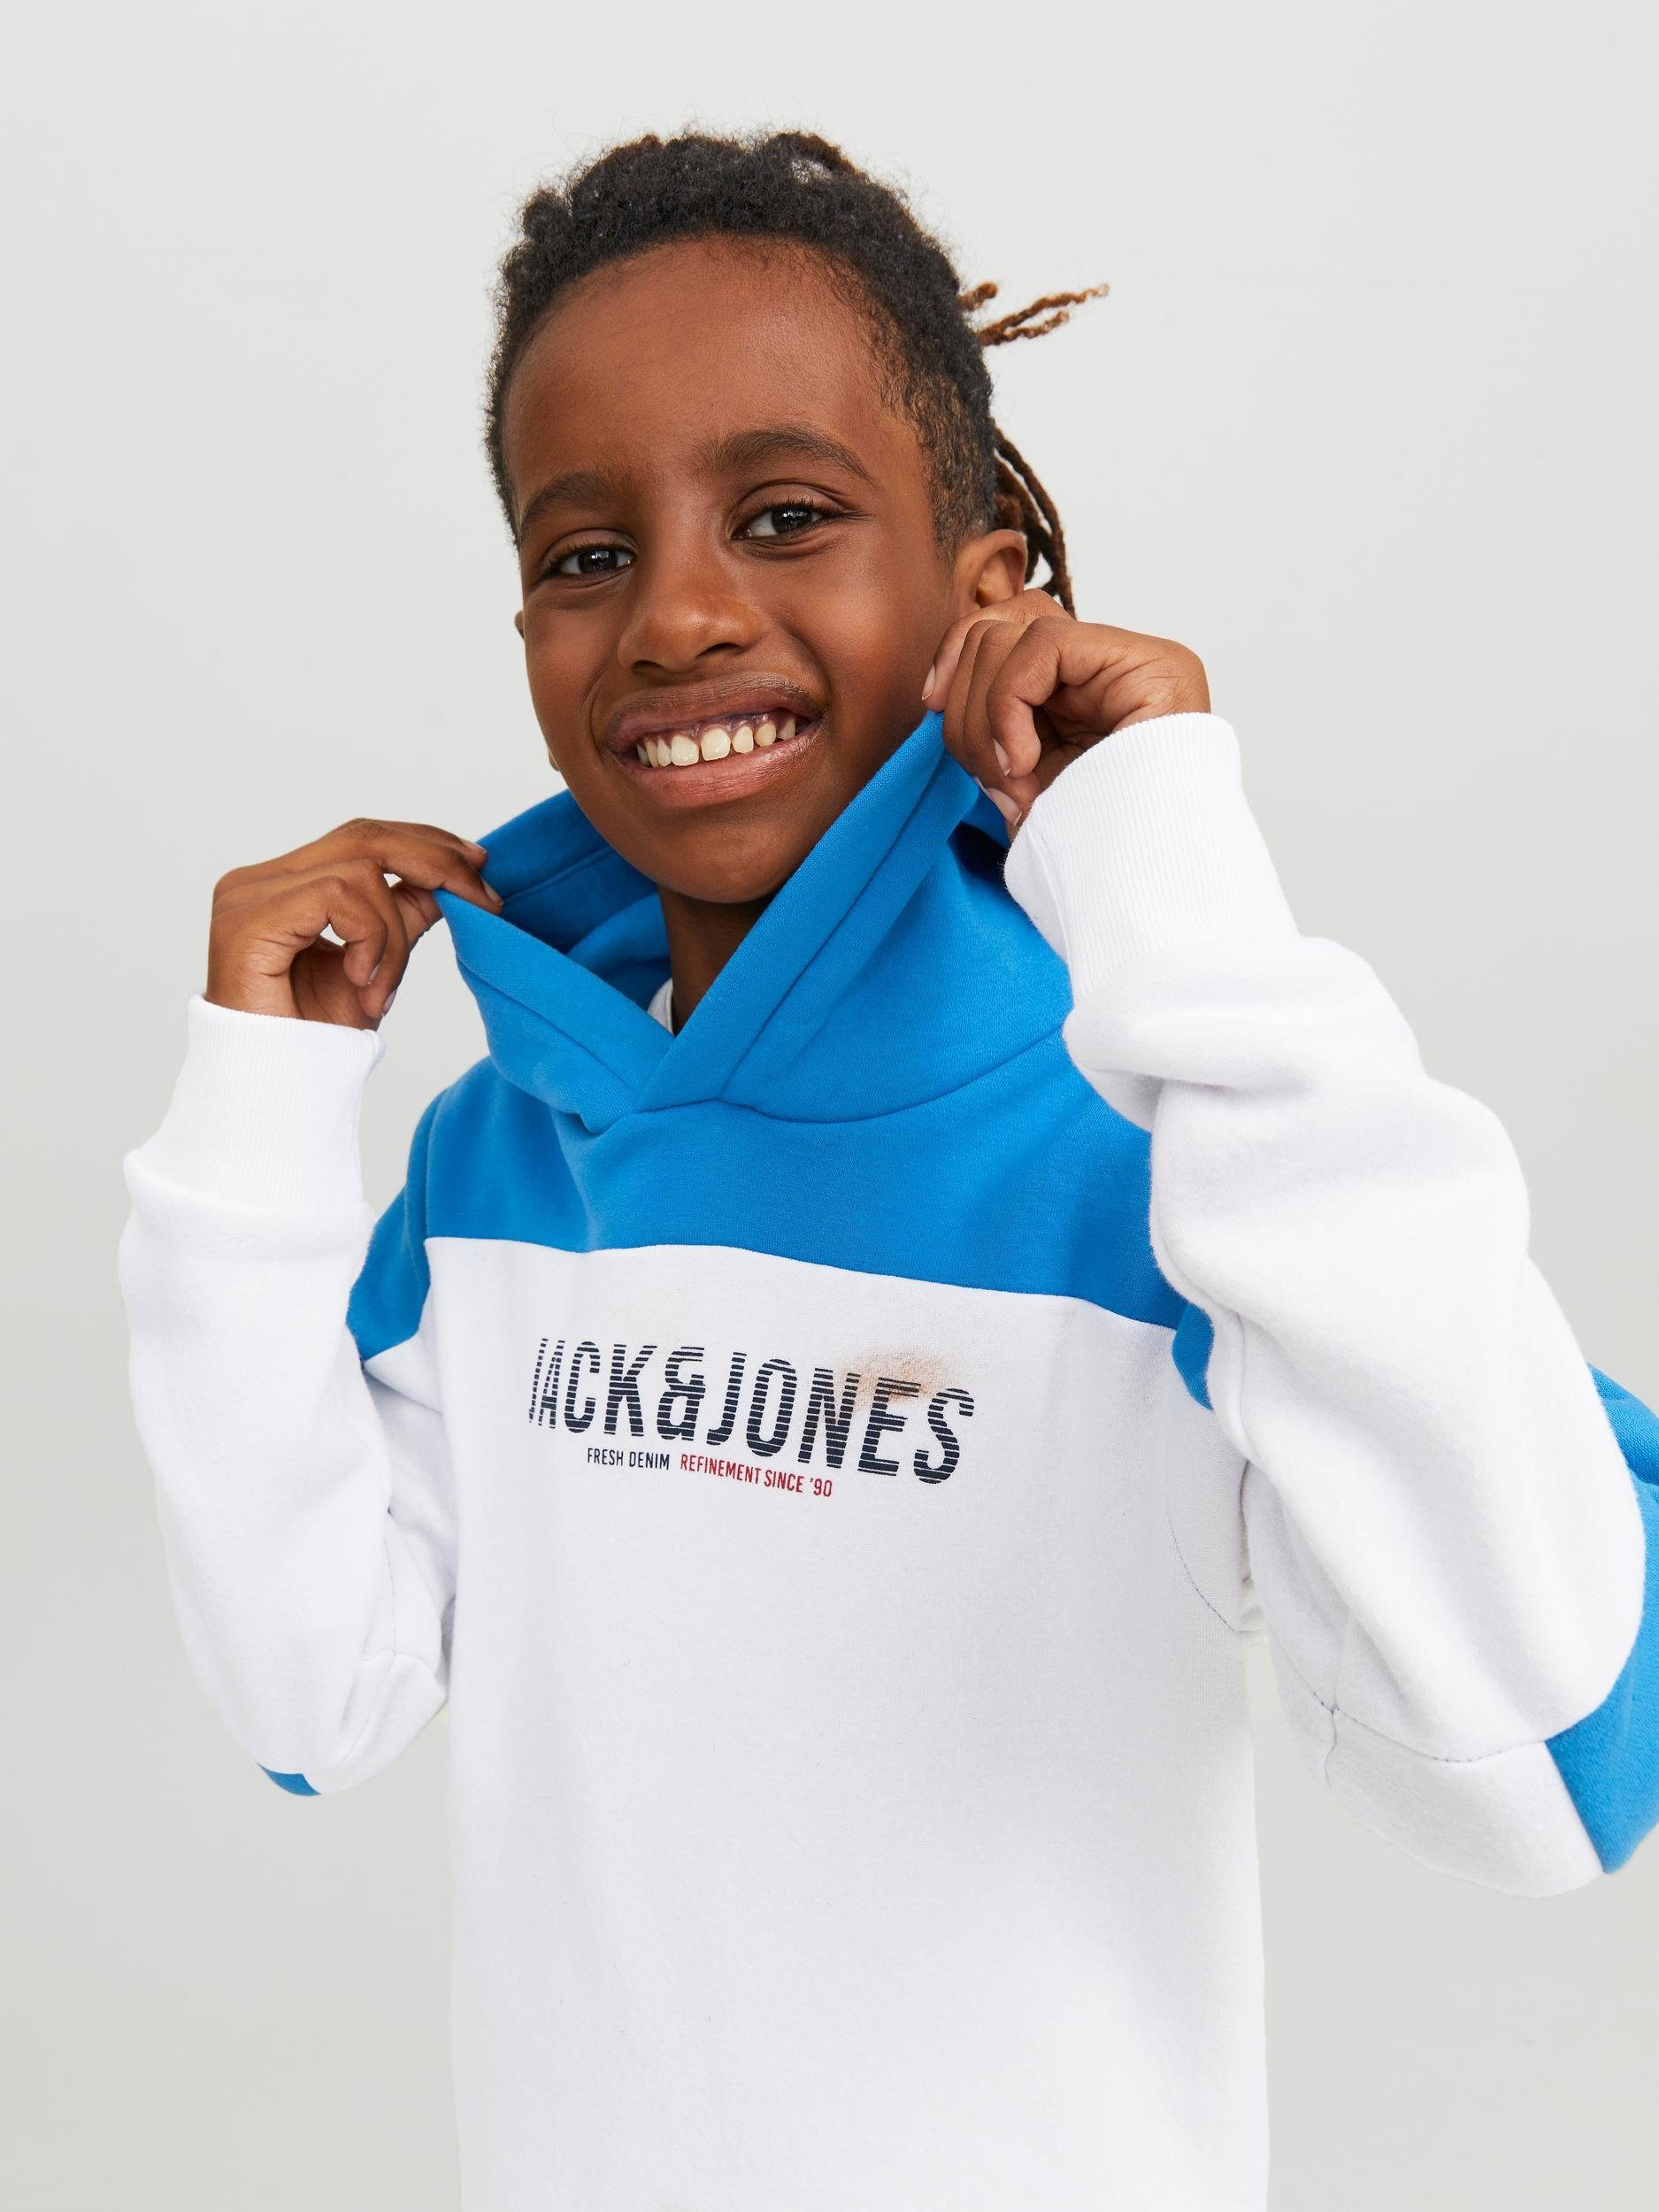 Jack & Jones Junior french blue Sweatshirt